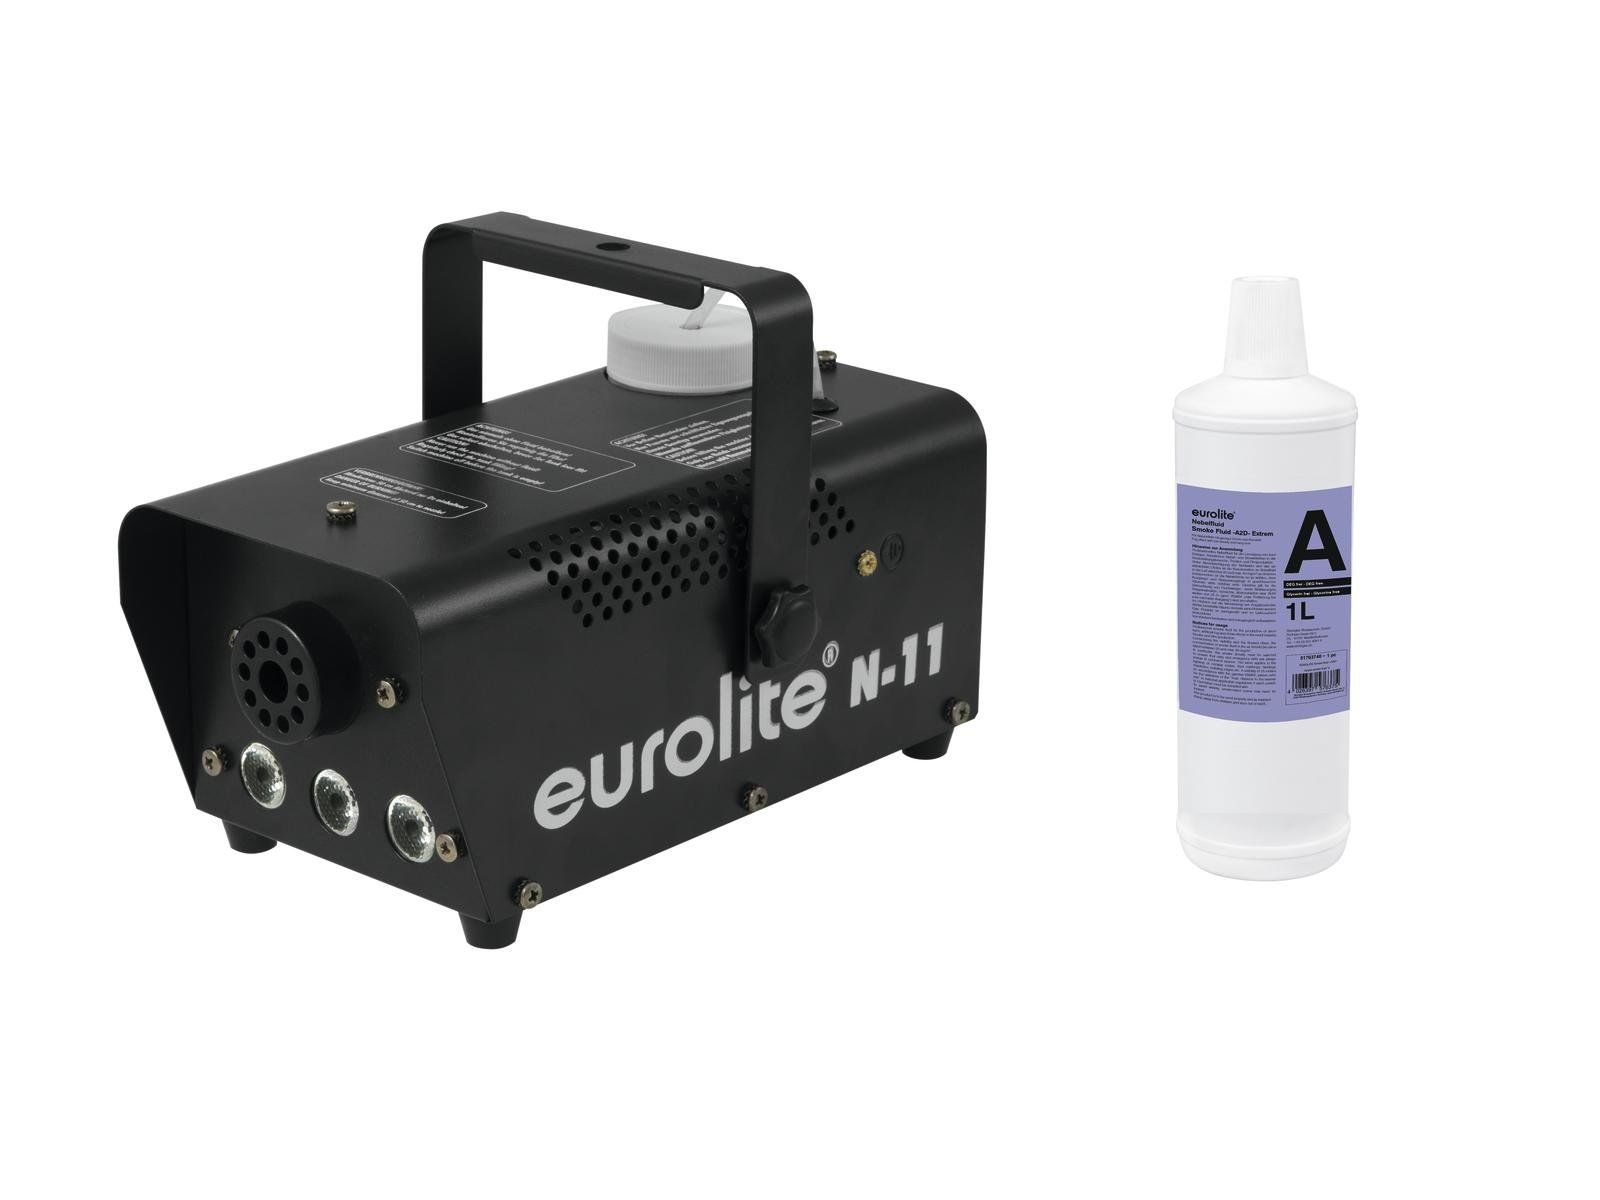 Eurolite N-11 LED + A2D Action smoke fluid 1l